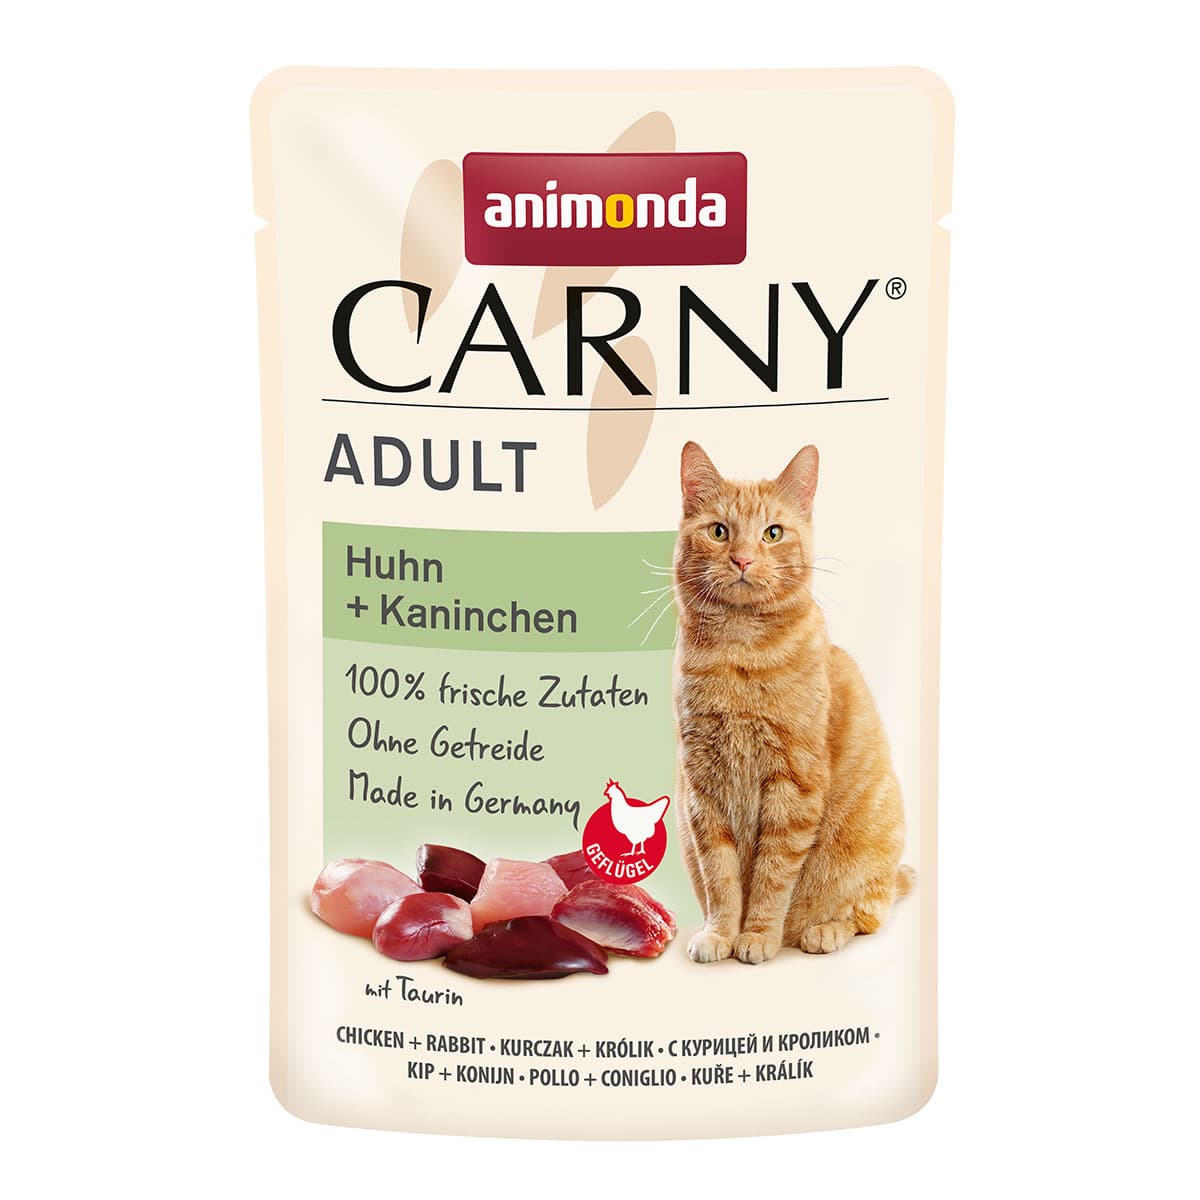 animonda Carny Adult Huhn + Kaninchen 24x85g